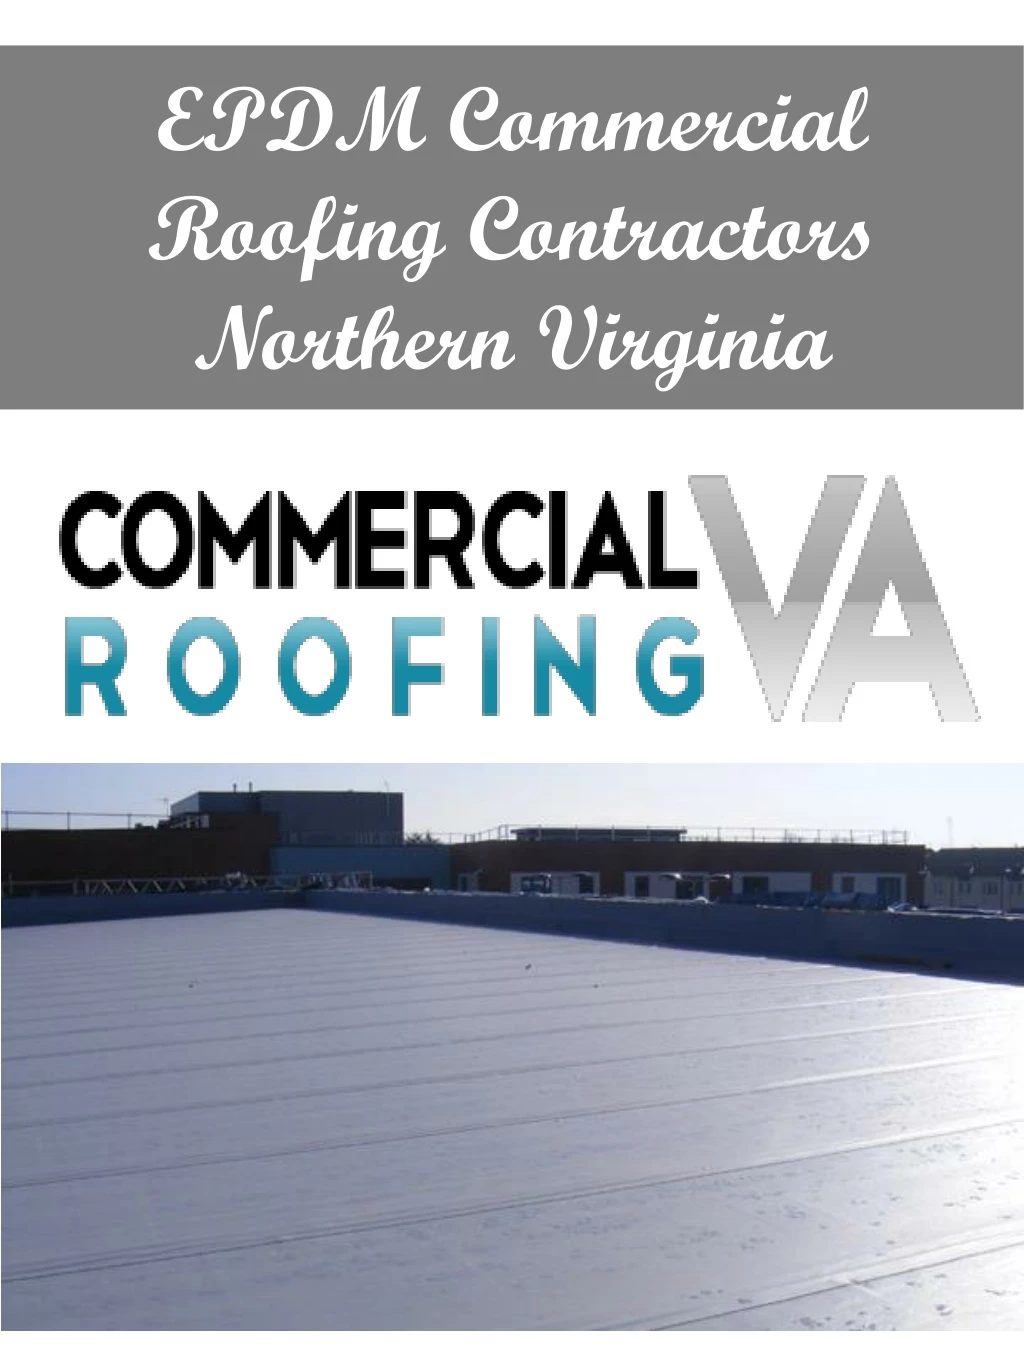 epdm commercial roofing contractors northern virginia